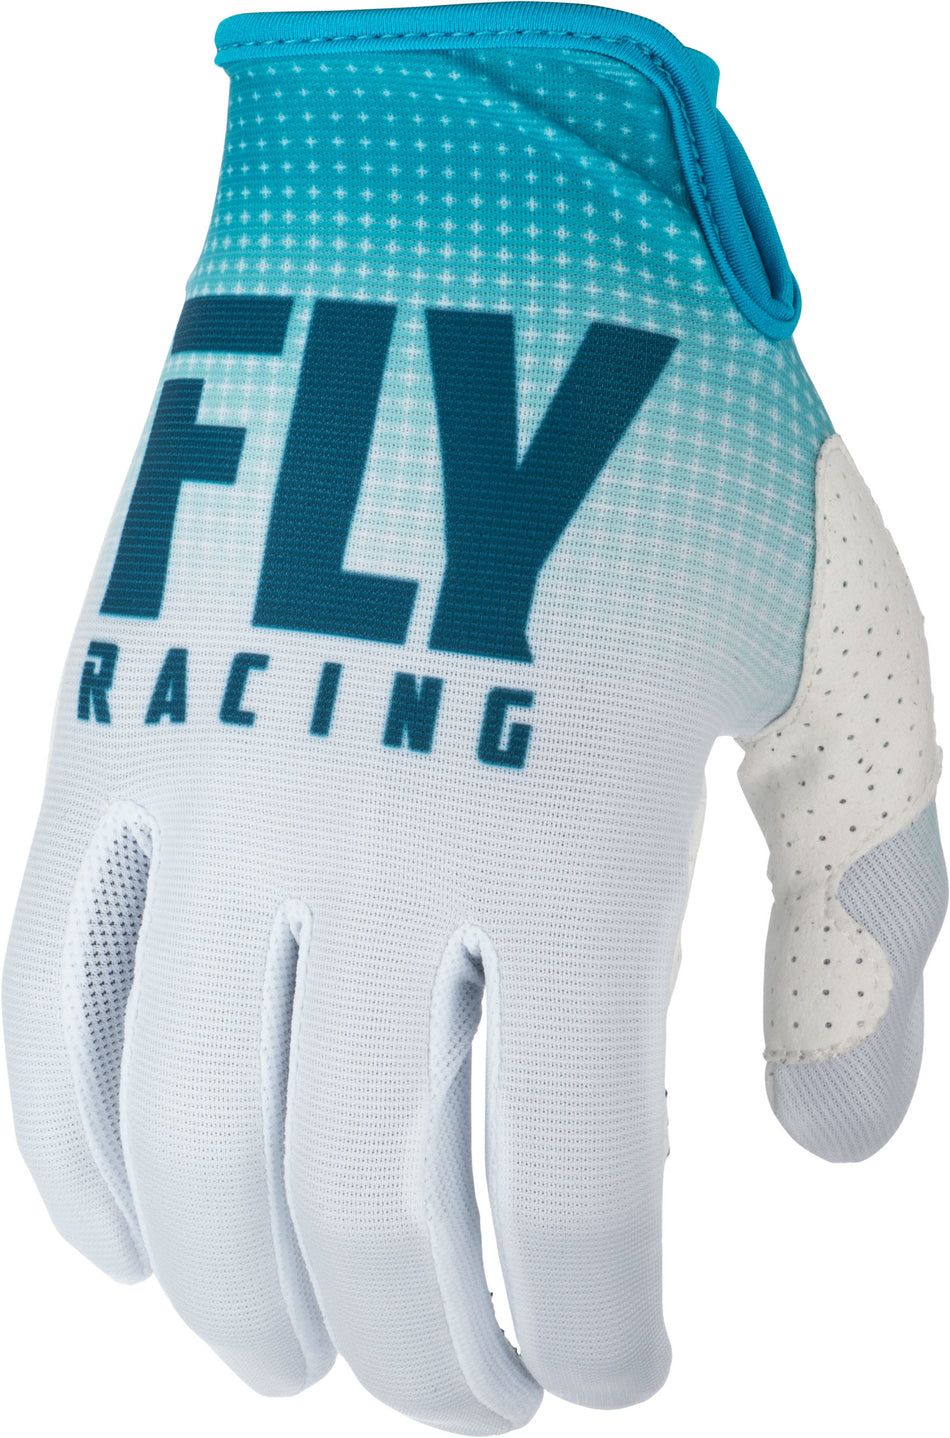 FLY RACING Lite Gloves Blue/White Sz 06 372-01106